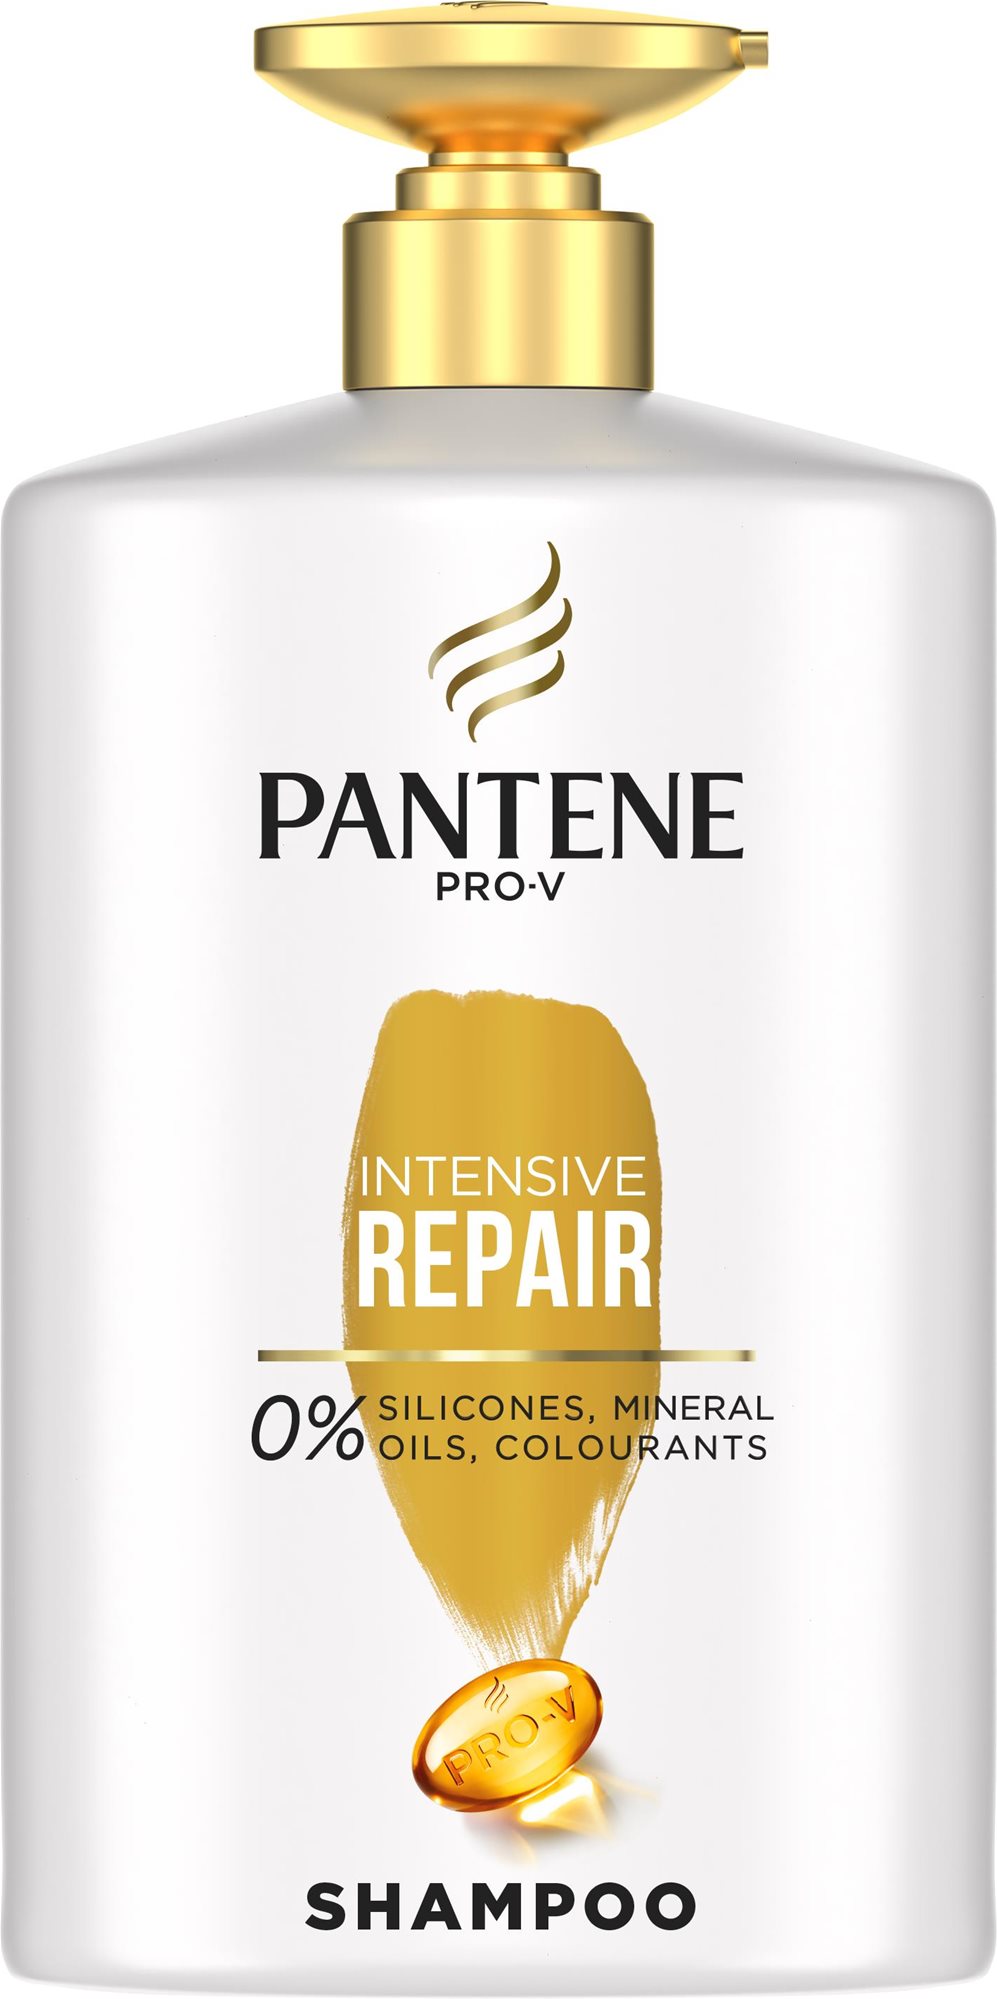 PANTENE Pro-V Intensive Repair sampon sérült hajra 1000 ml